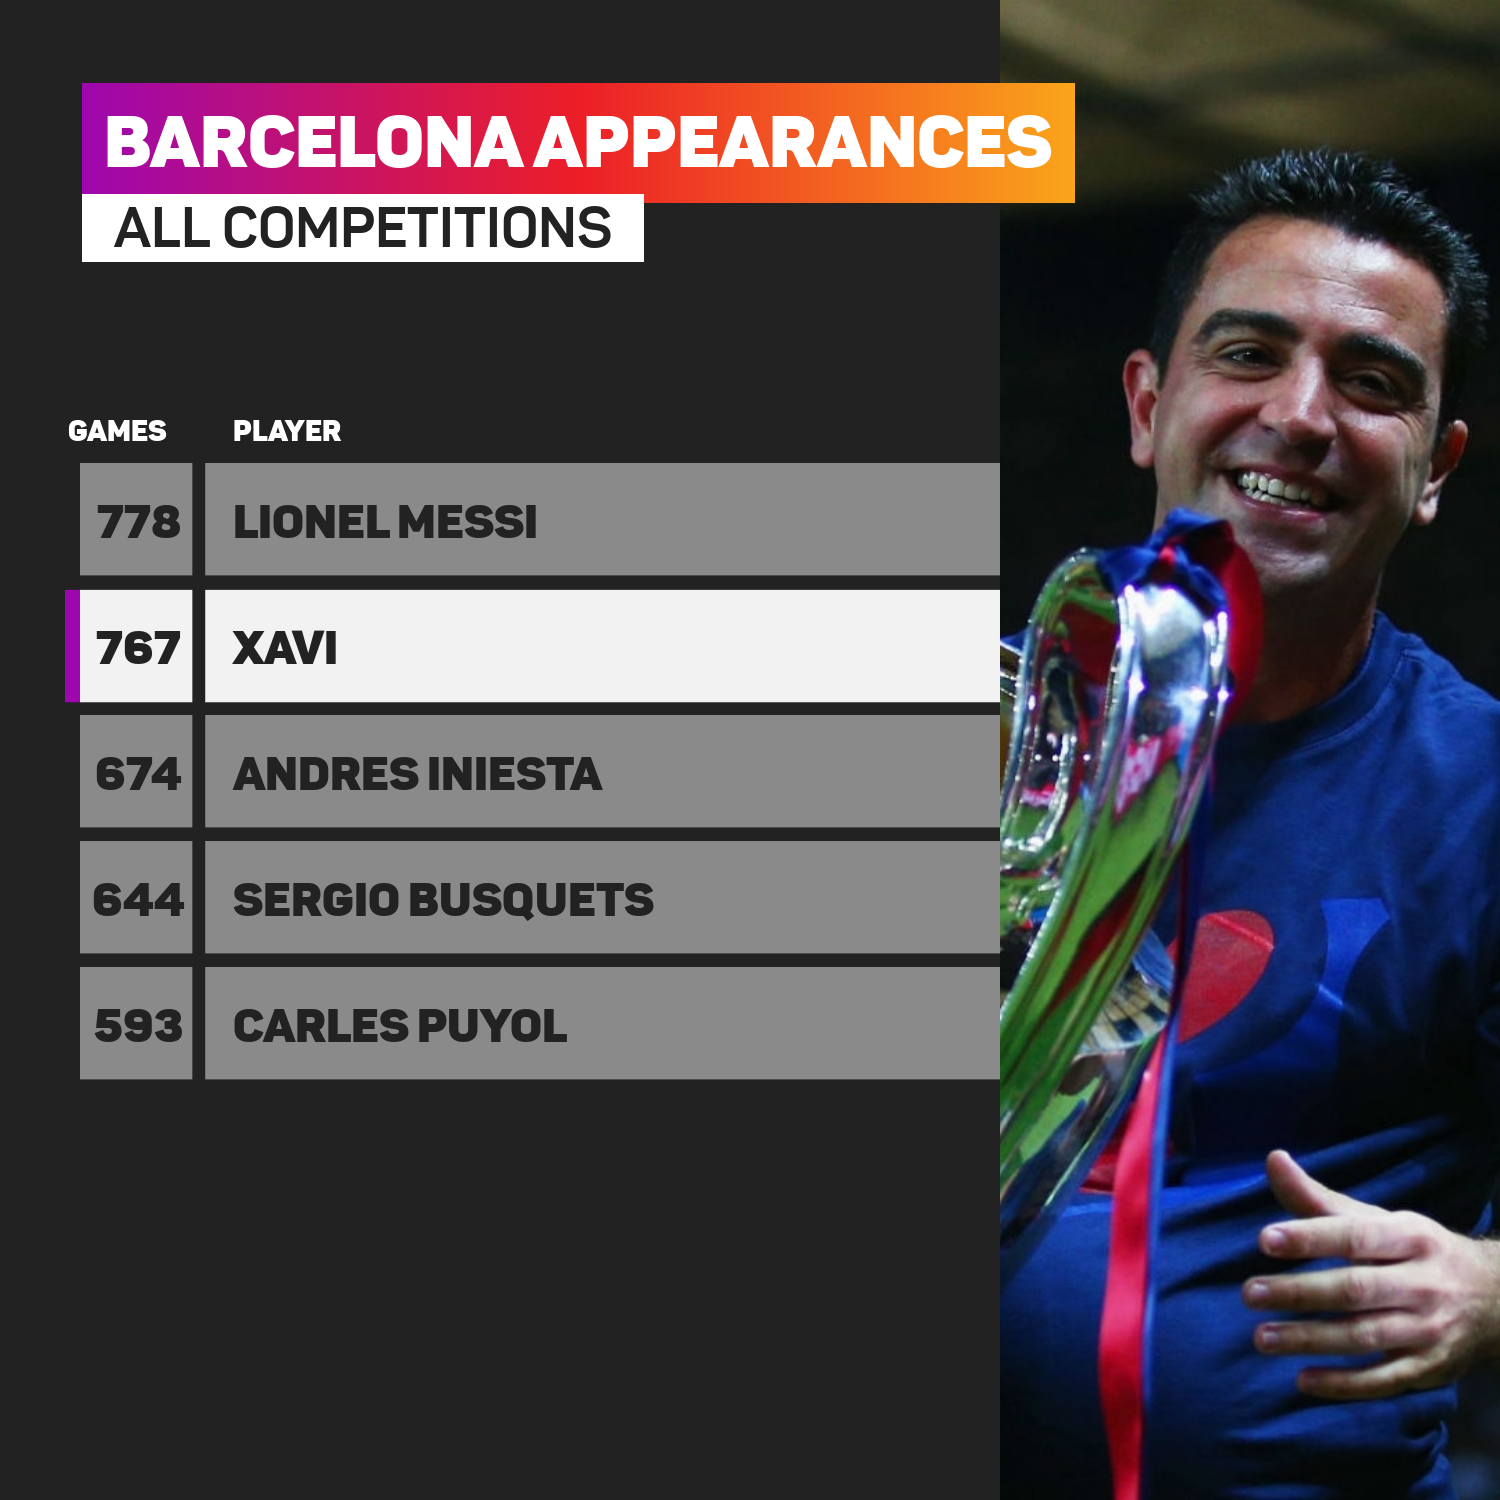 Xavi made 767 appearances for Barcelona